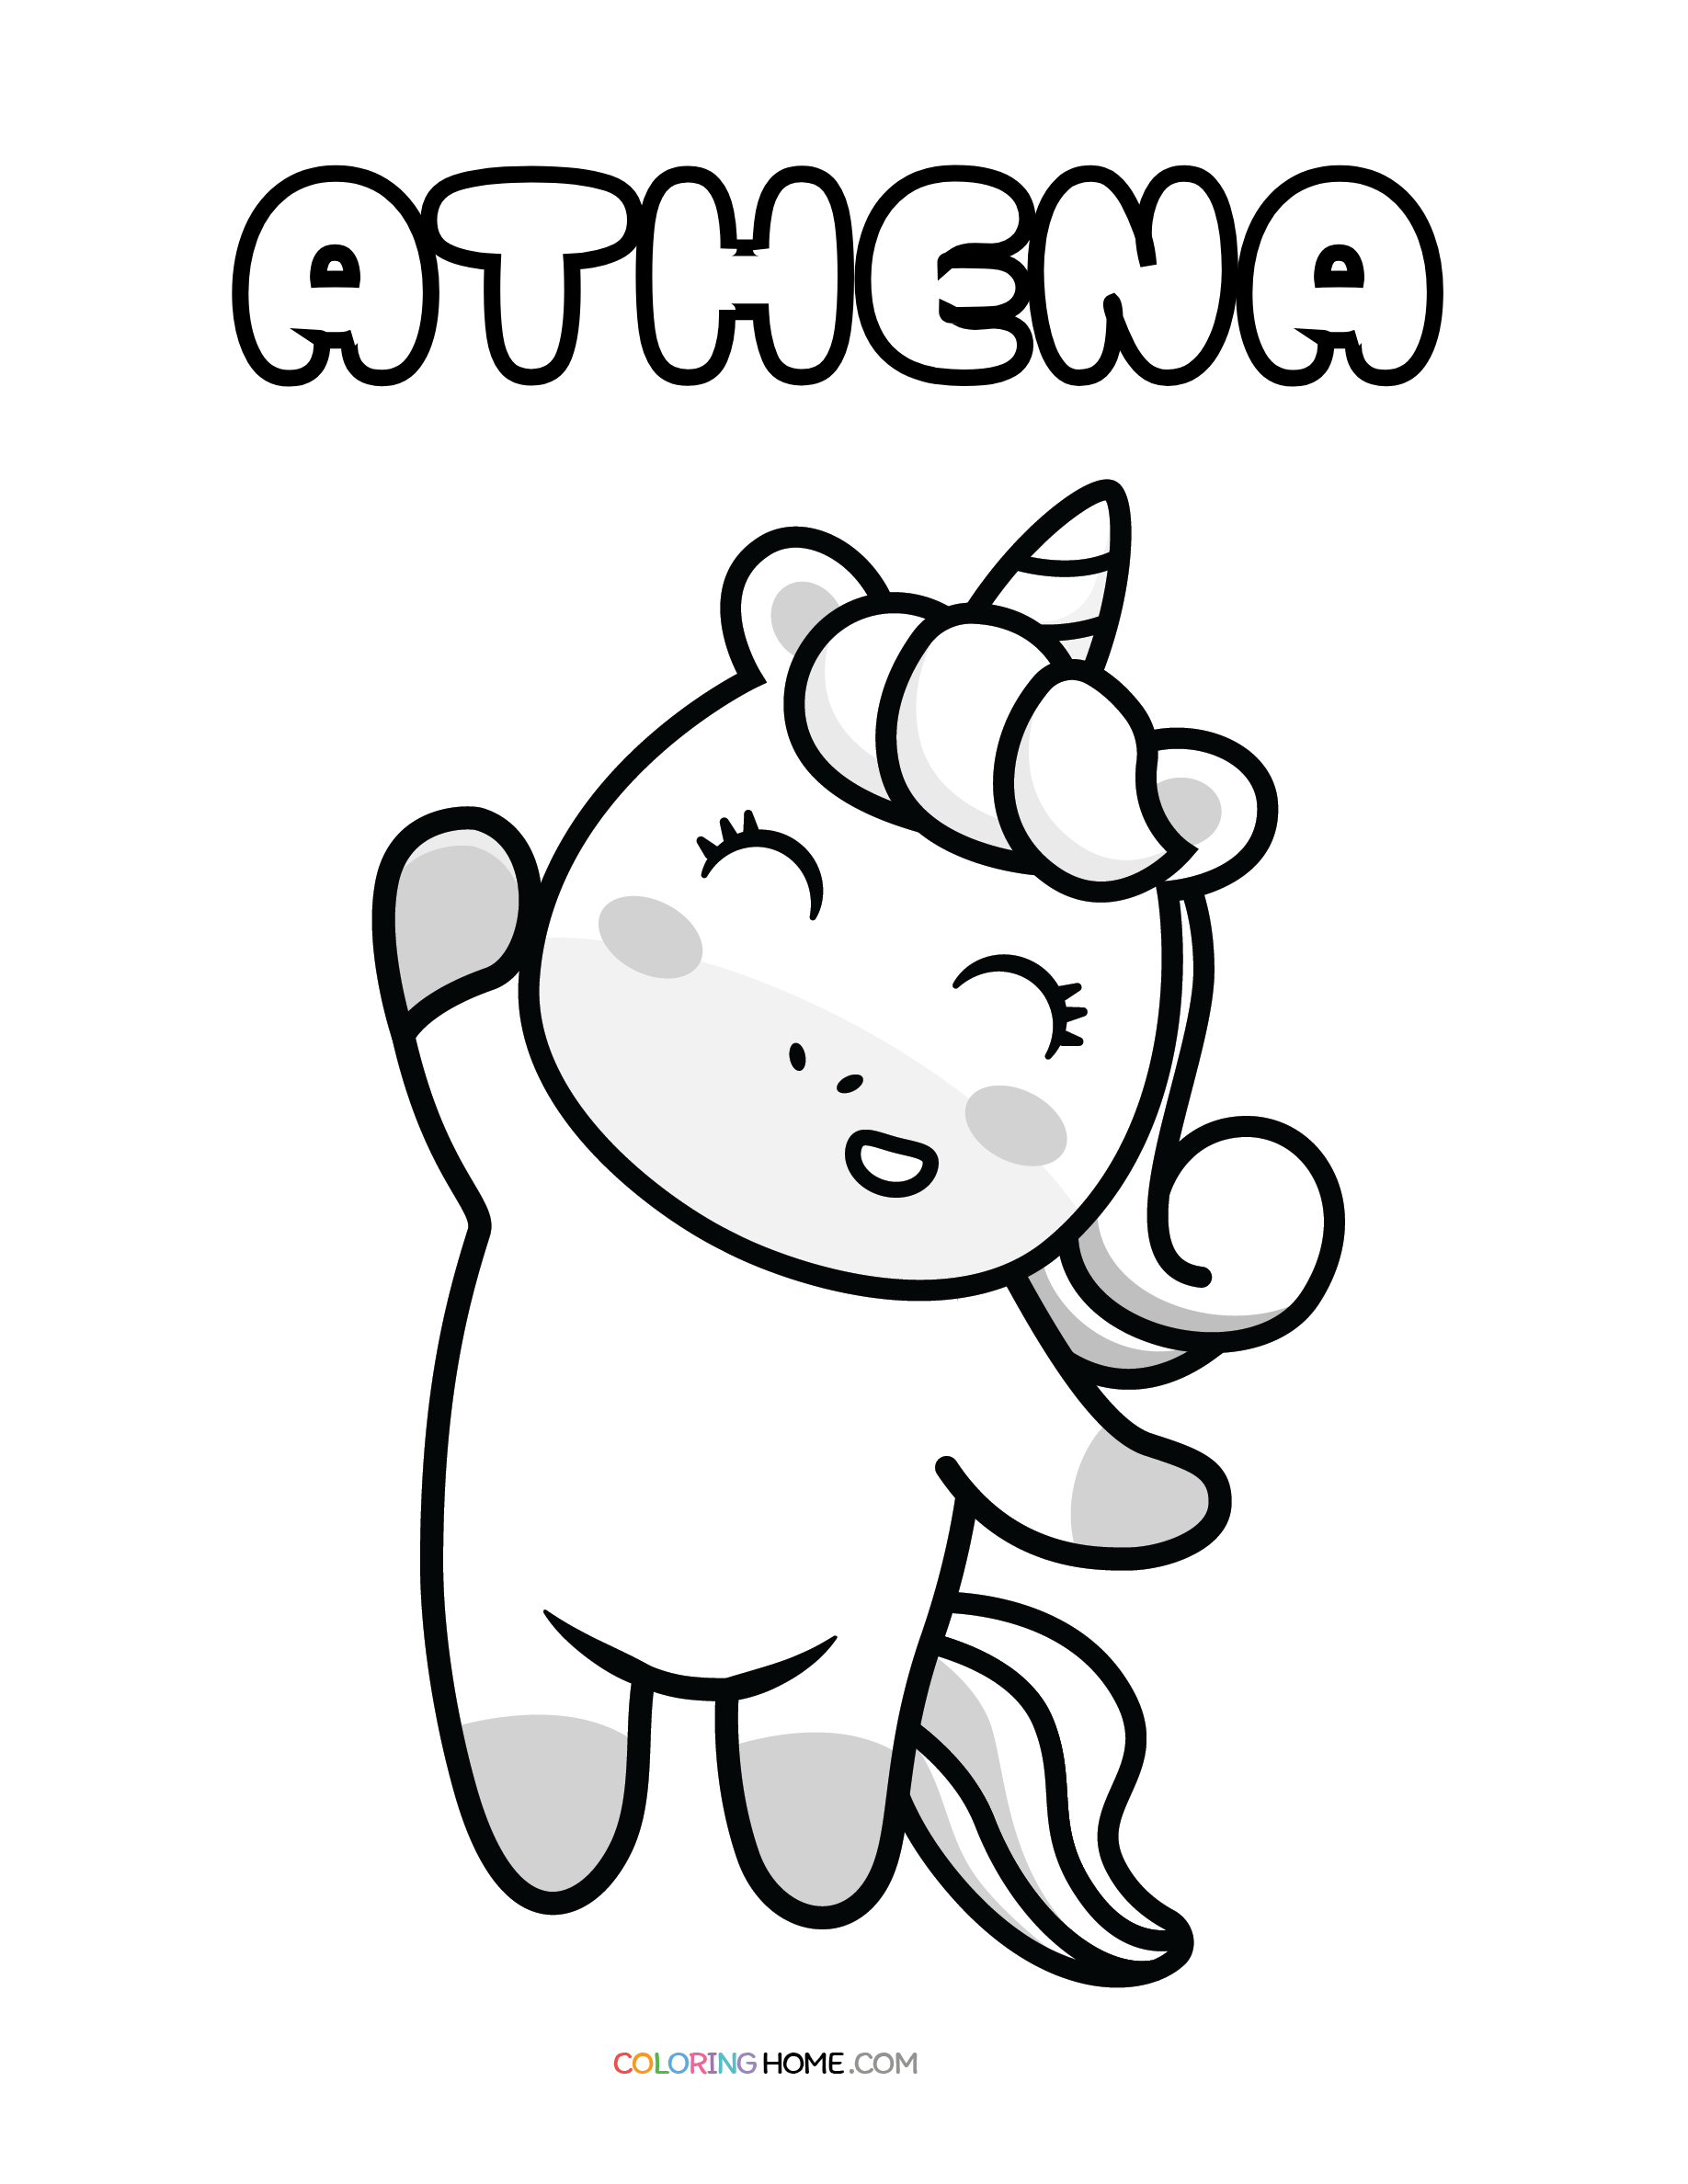 Athena unicorn coloring page